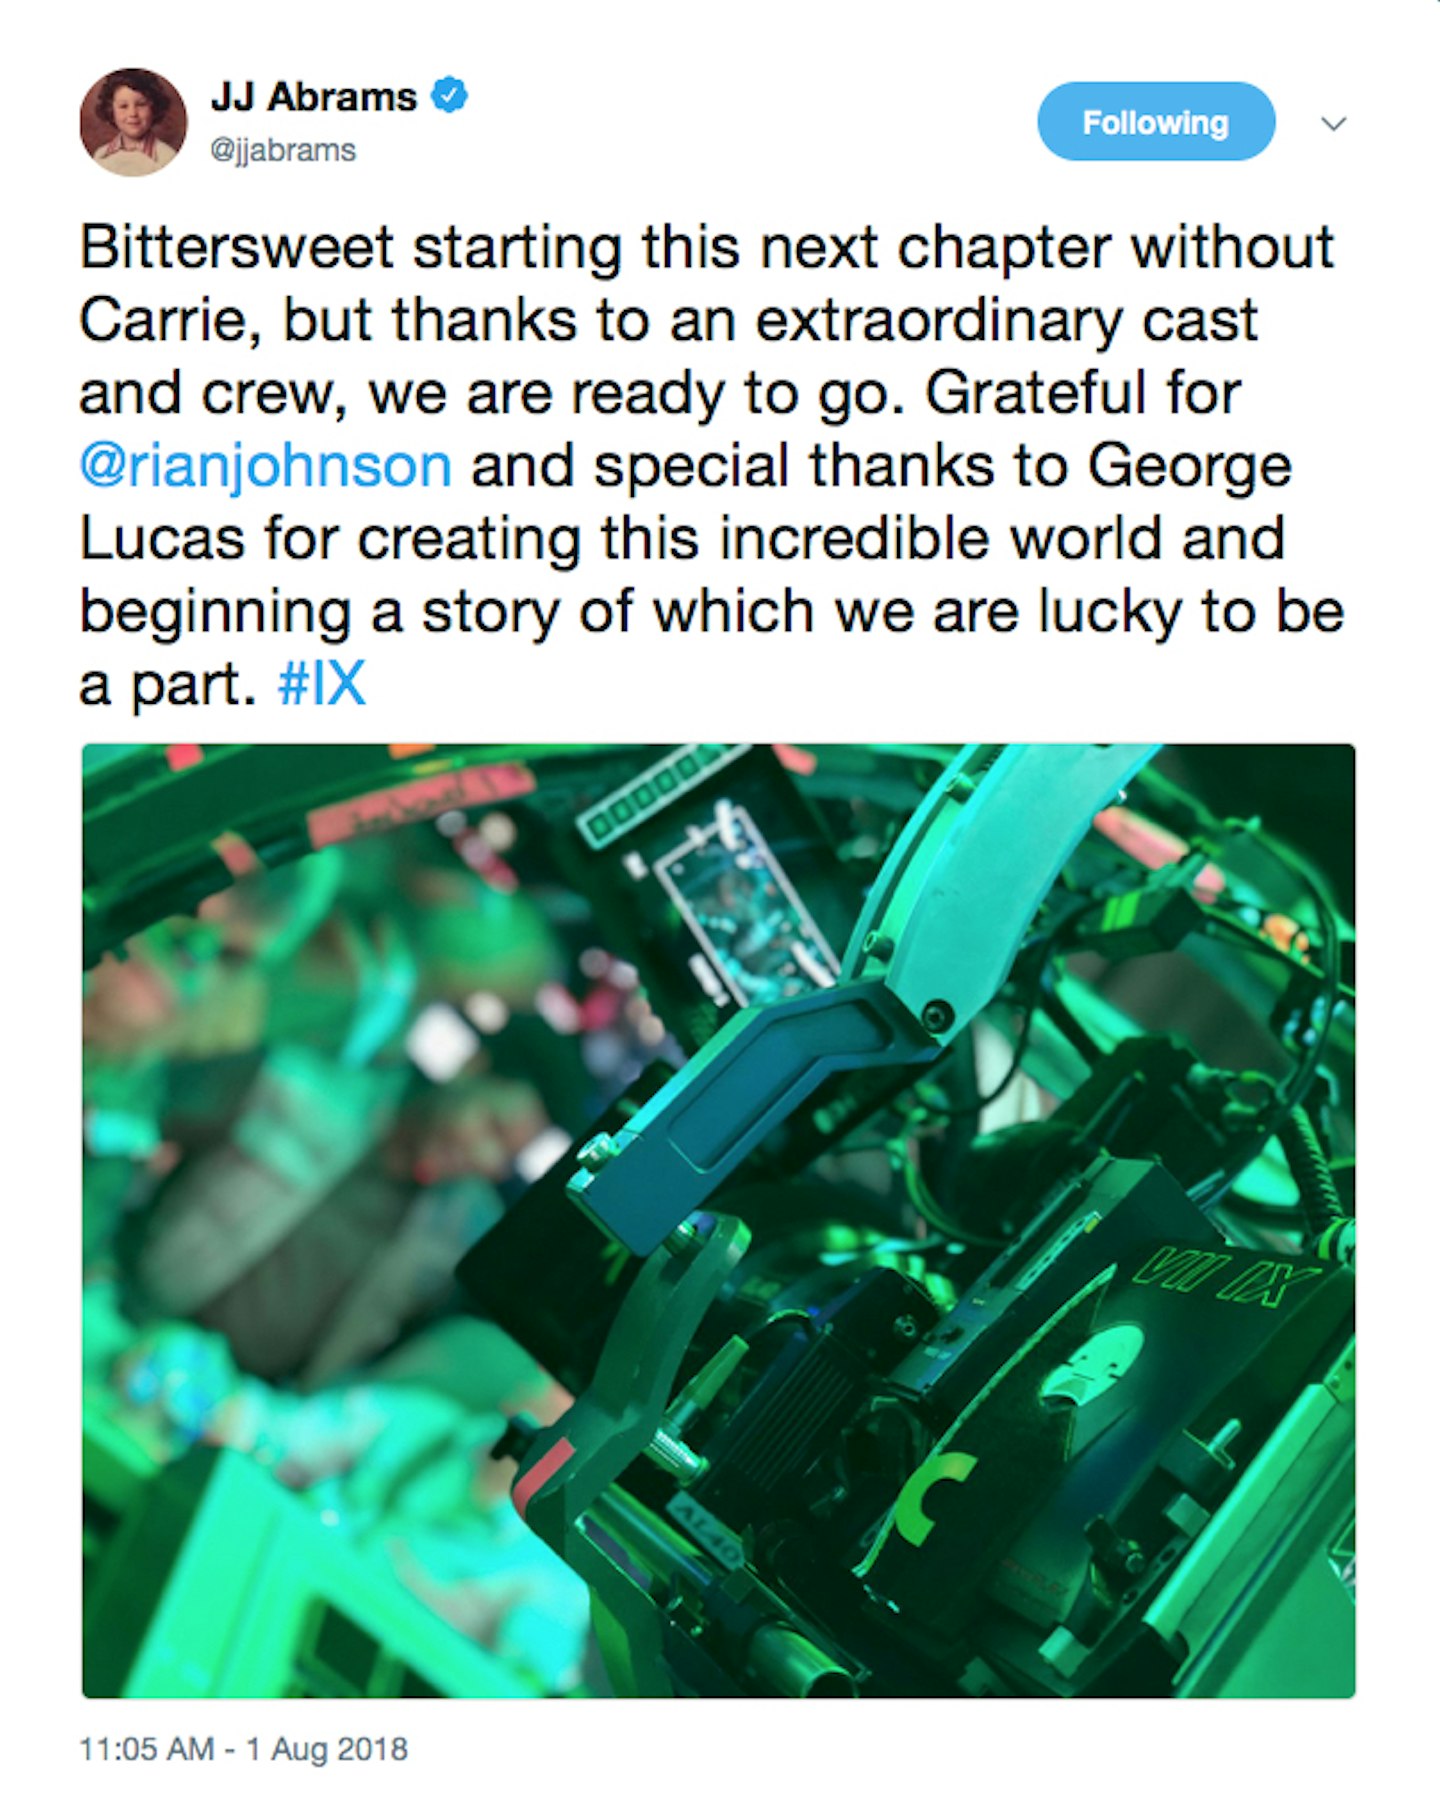 JJ Abrams Star Wars Episode IX Tweet